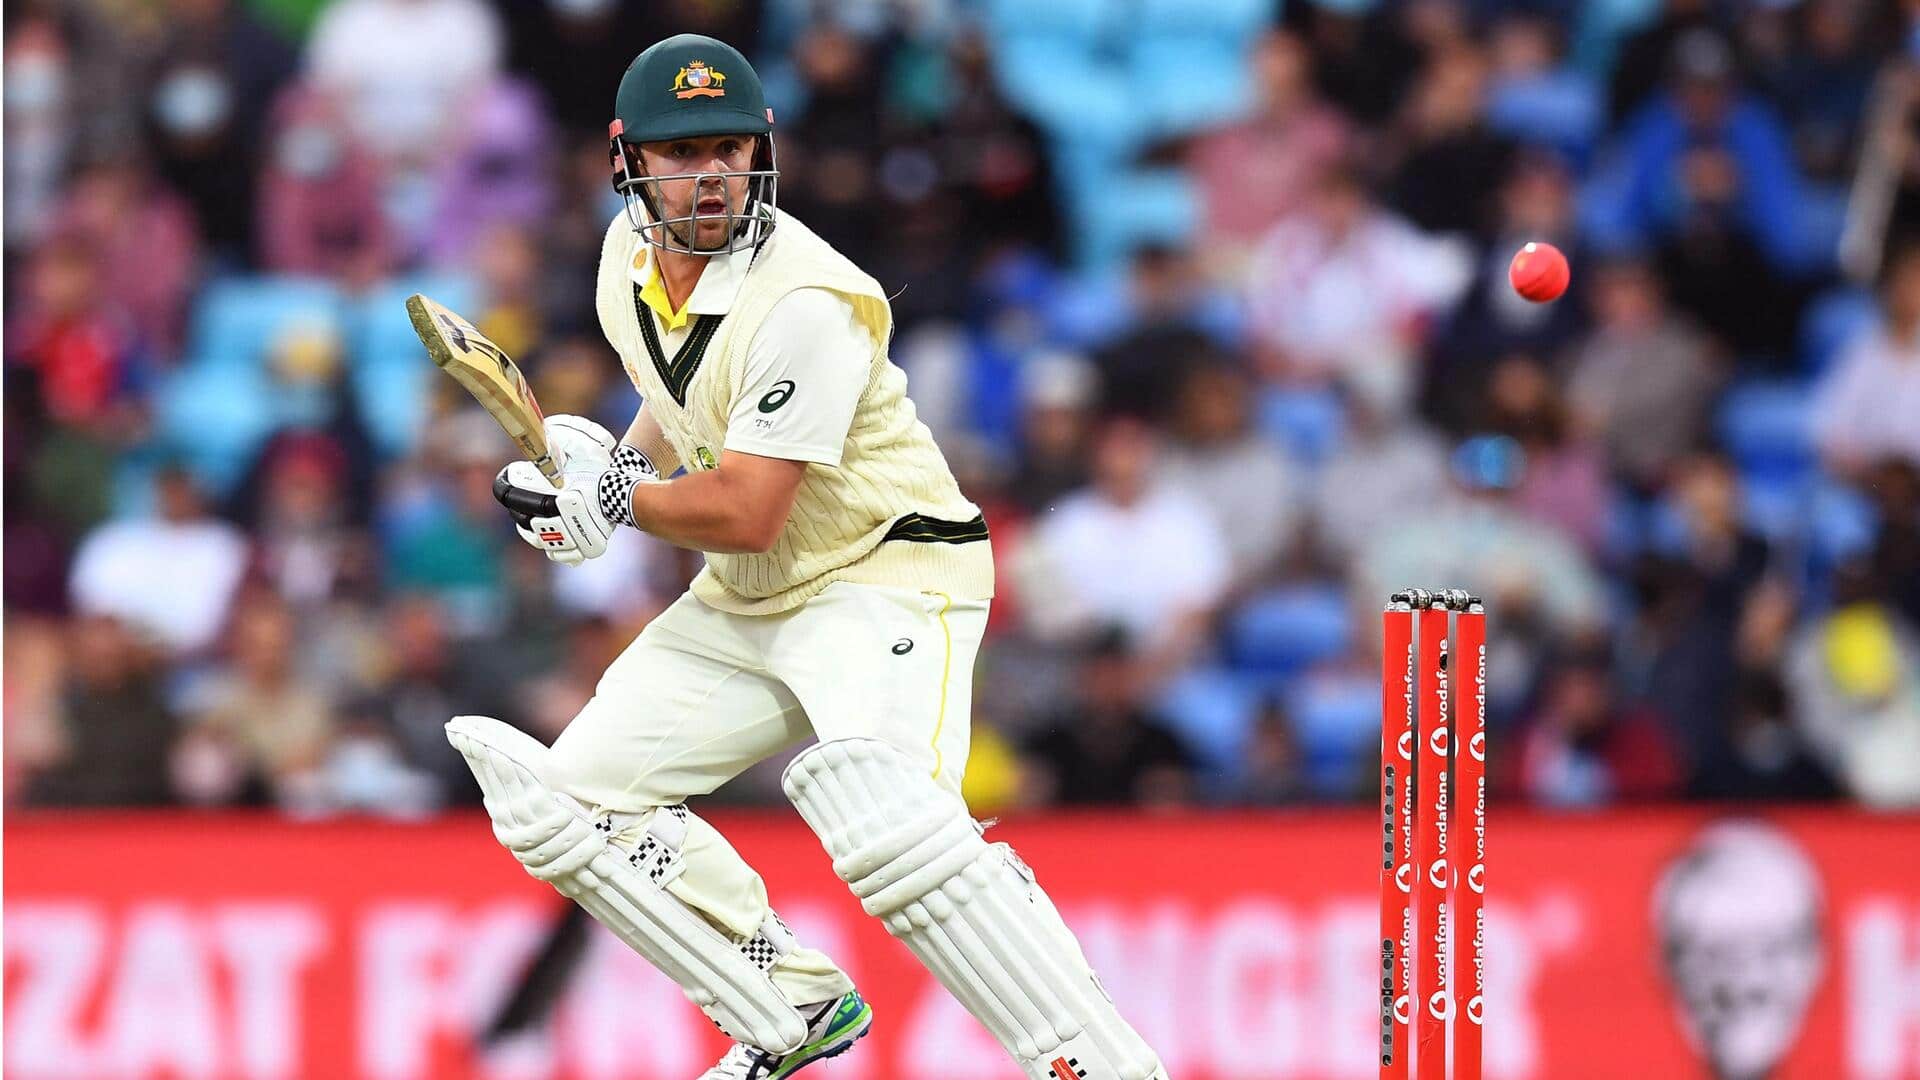 Travis Head hammers his second Test century against West Indies